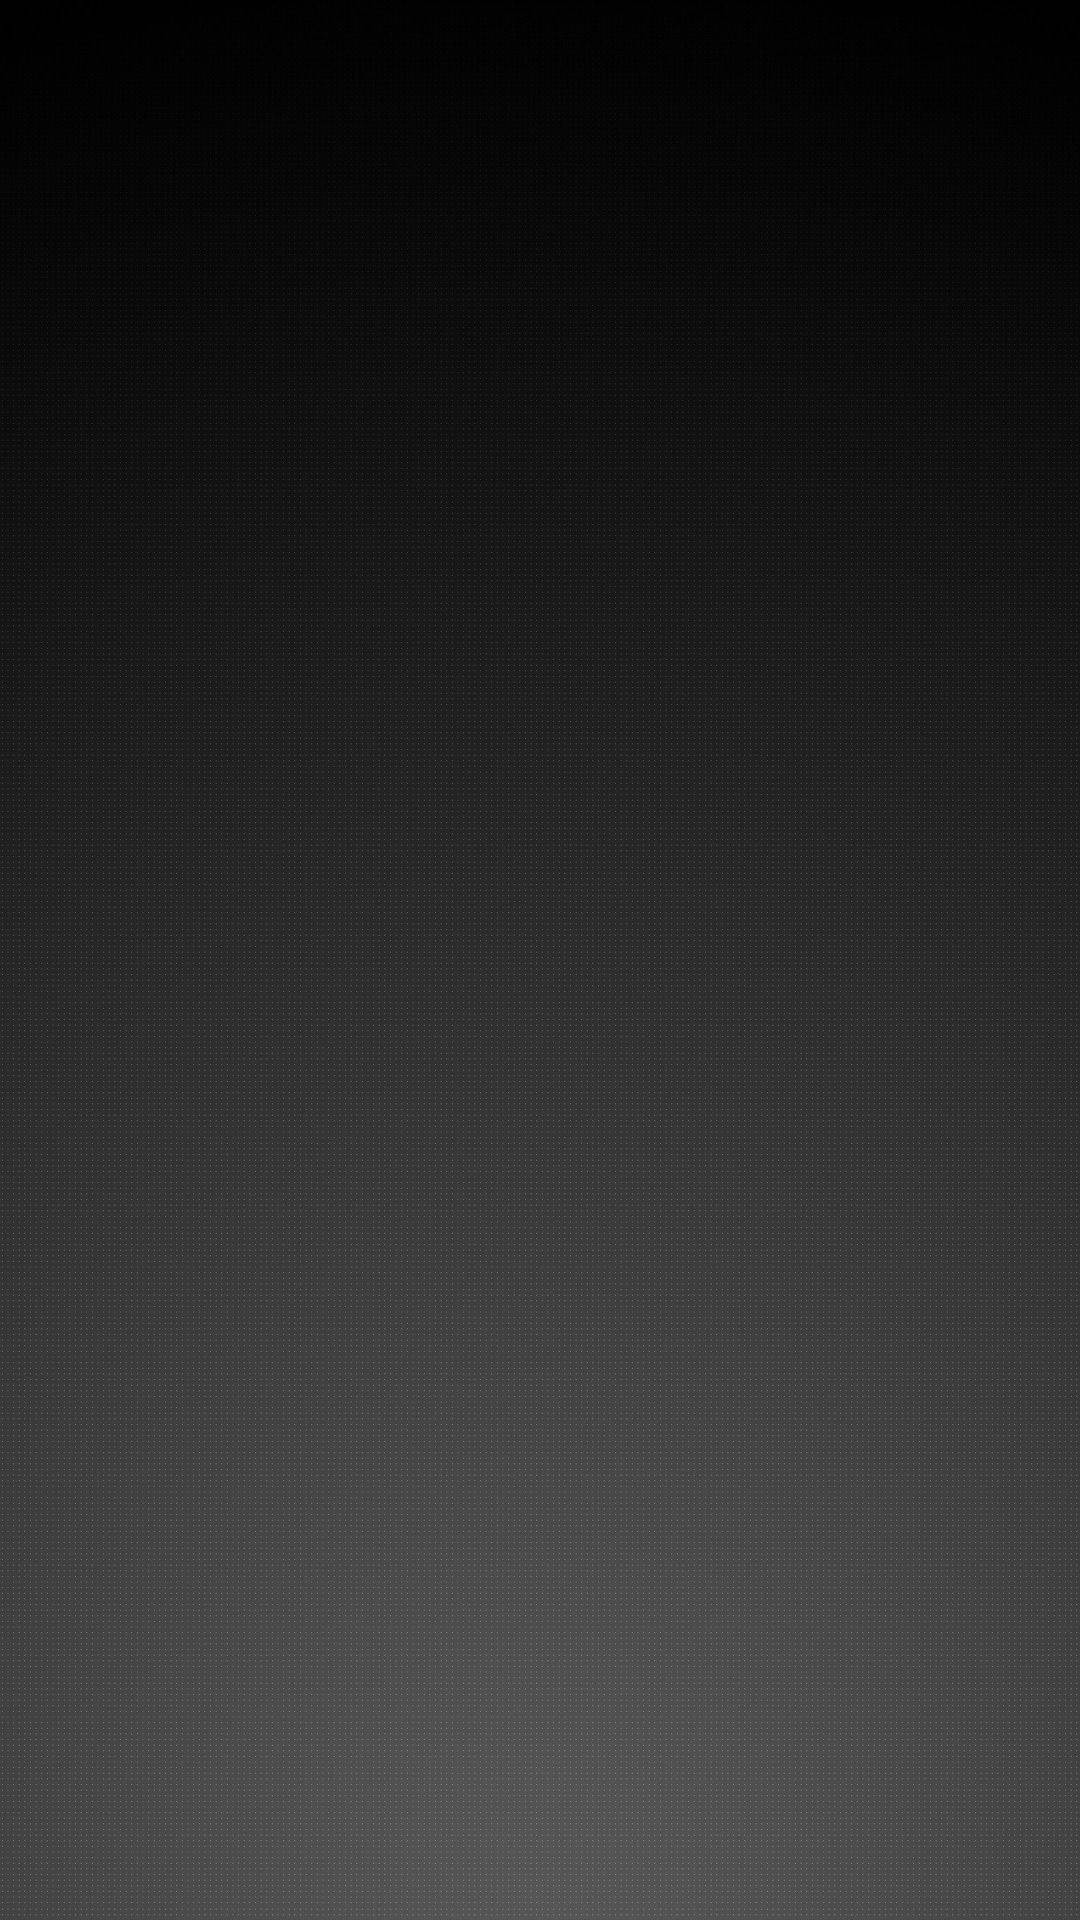 1625 Dark Grey Wallpaper  Android iPhone Desktop HD Backgrounds   Wallpapers 1080p 4k HD Wallpapers Desktop Background  Android  iPhone  1080p 4k 1080x608 2023